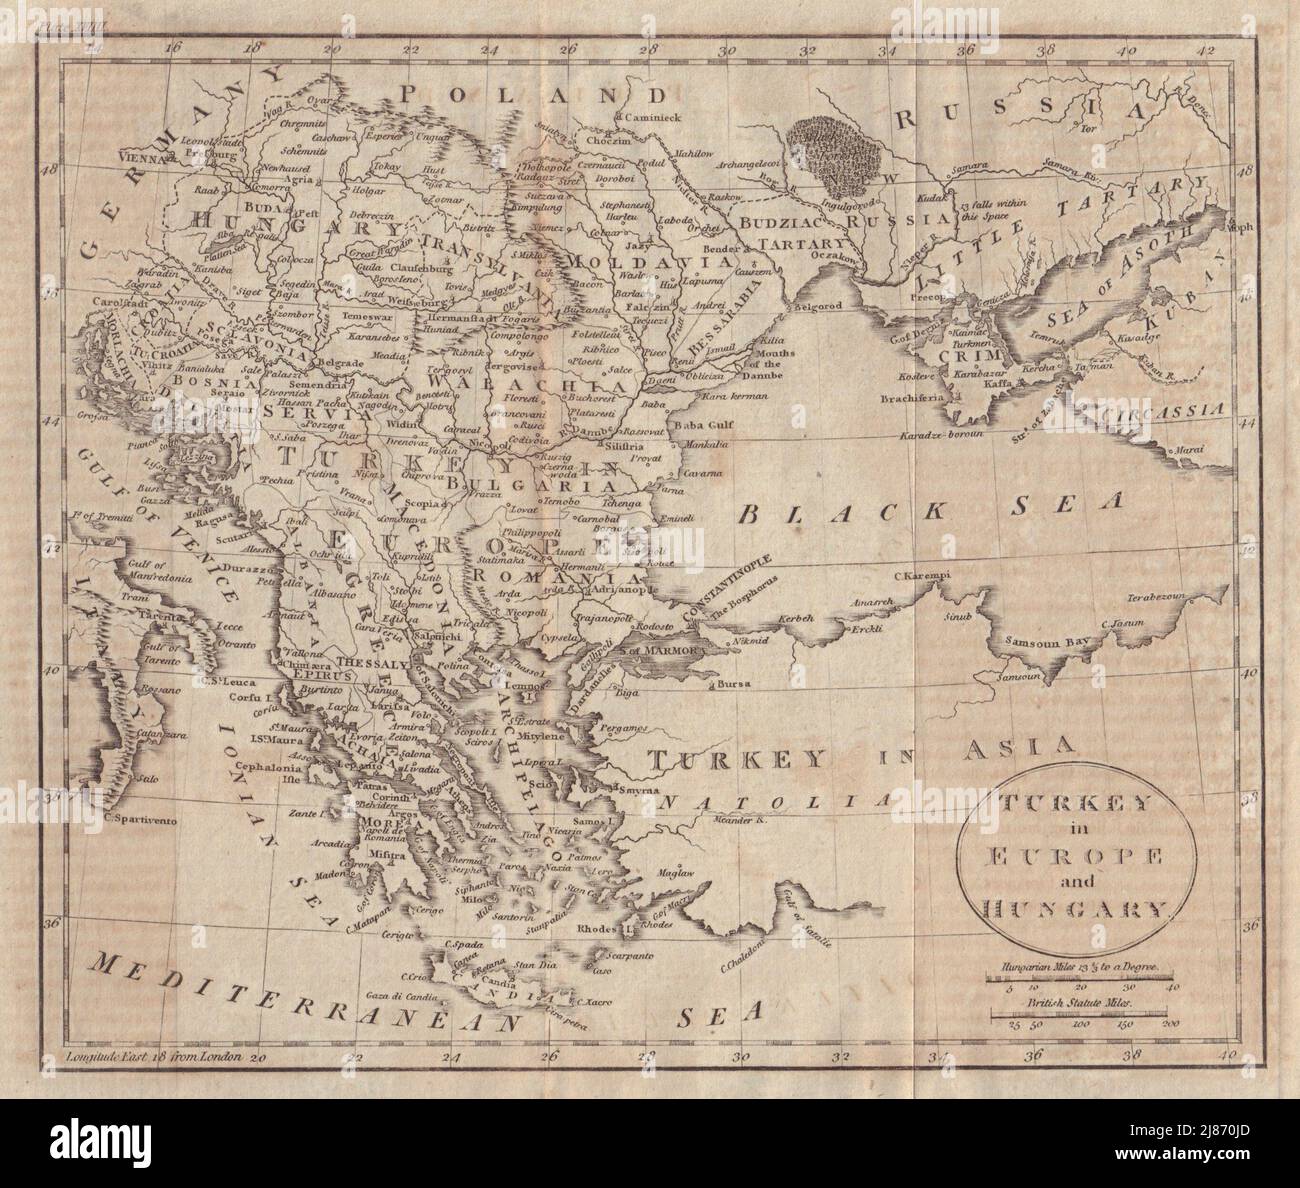 Turkey in Europe and Hungary. Balkans Greece Ukraine. WALKER 1805 old map Stock Photo